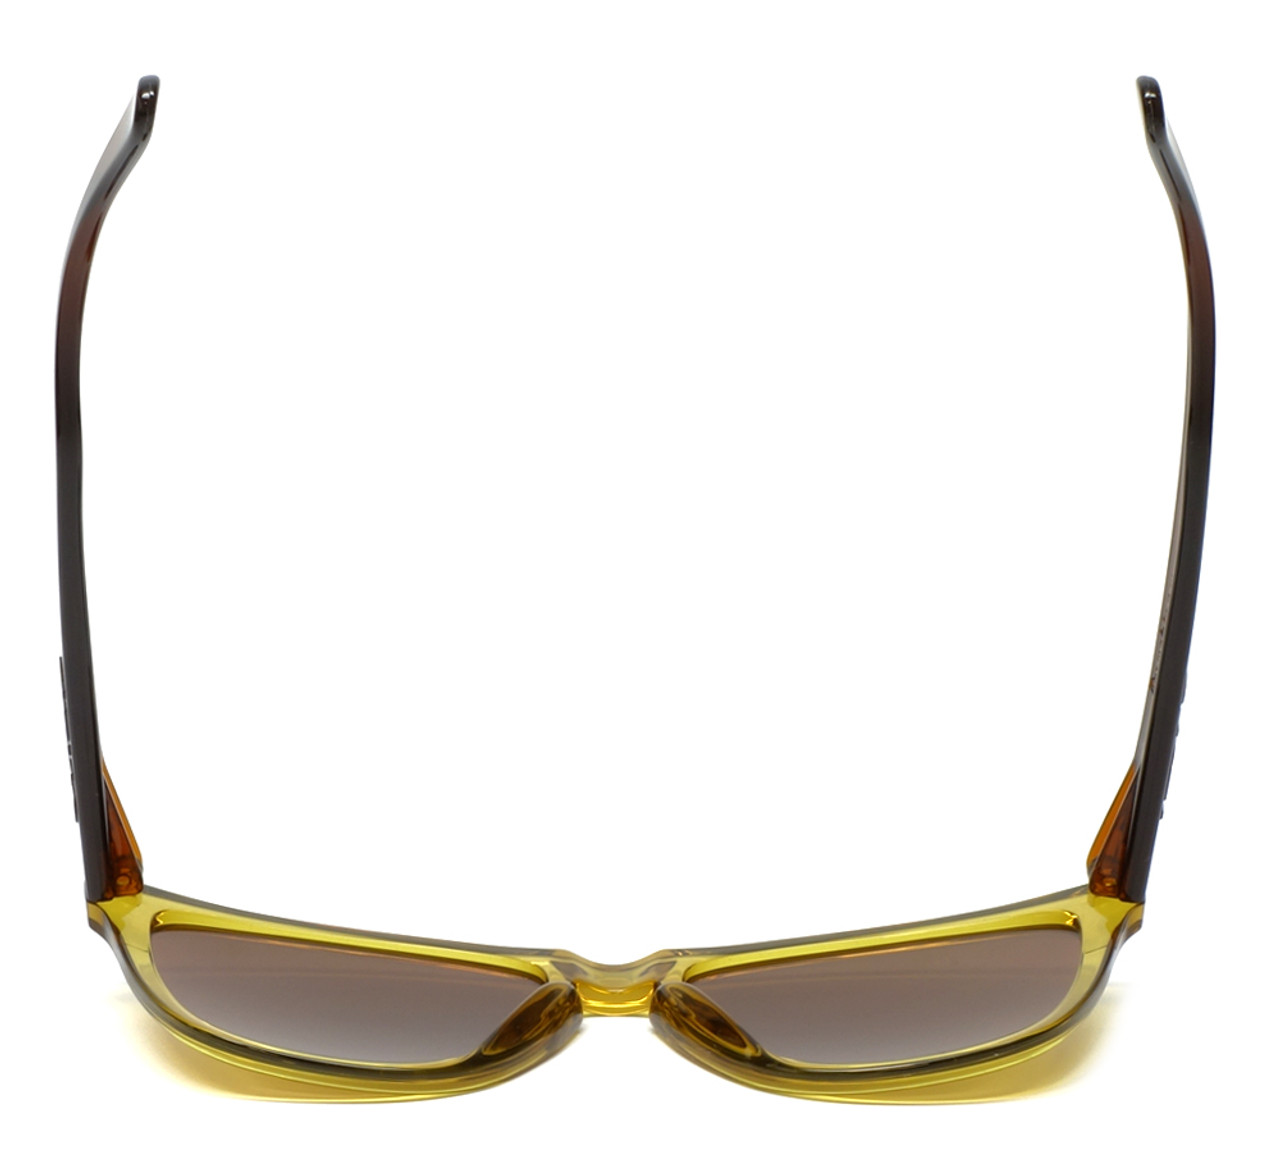 oakley octane sunglasses